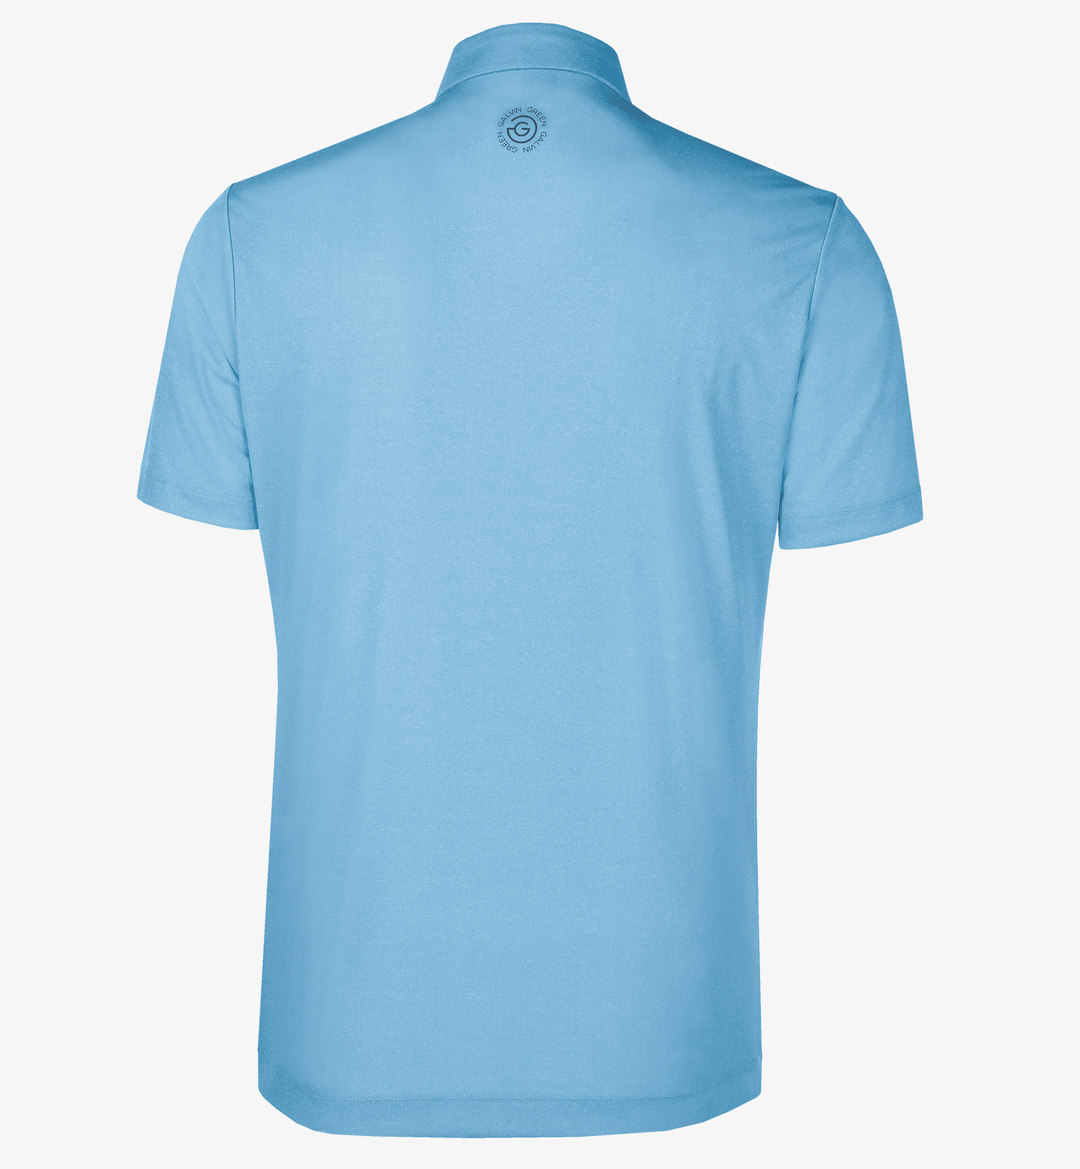 Marv is a Breathable short sleeve golf shirt for Men in the color Crystal Blue Melange(8)